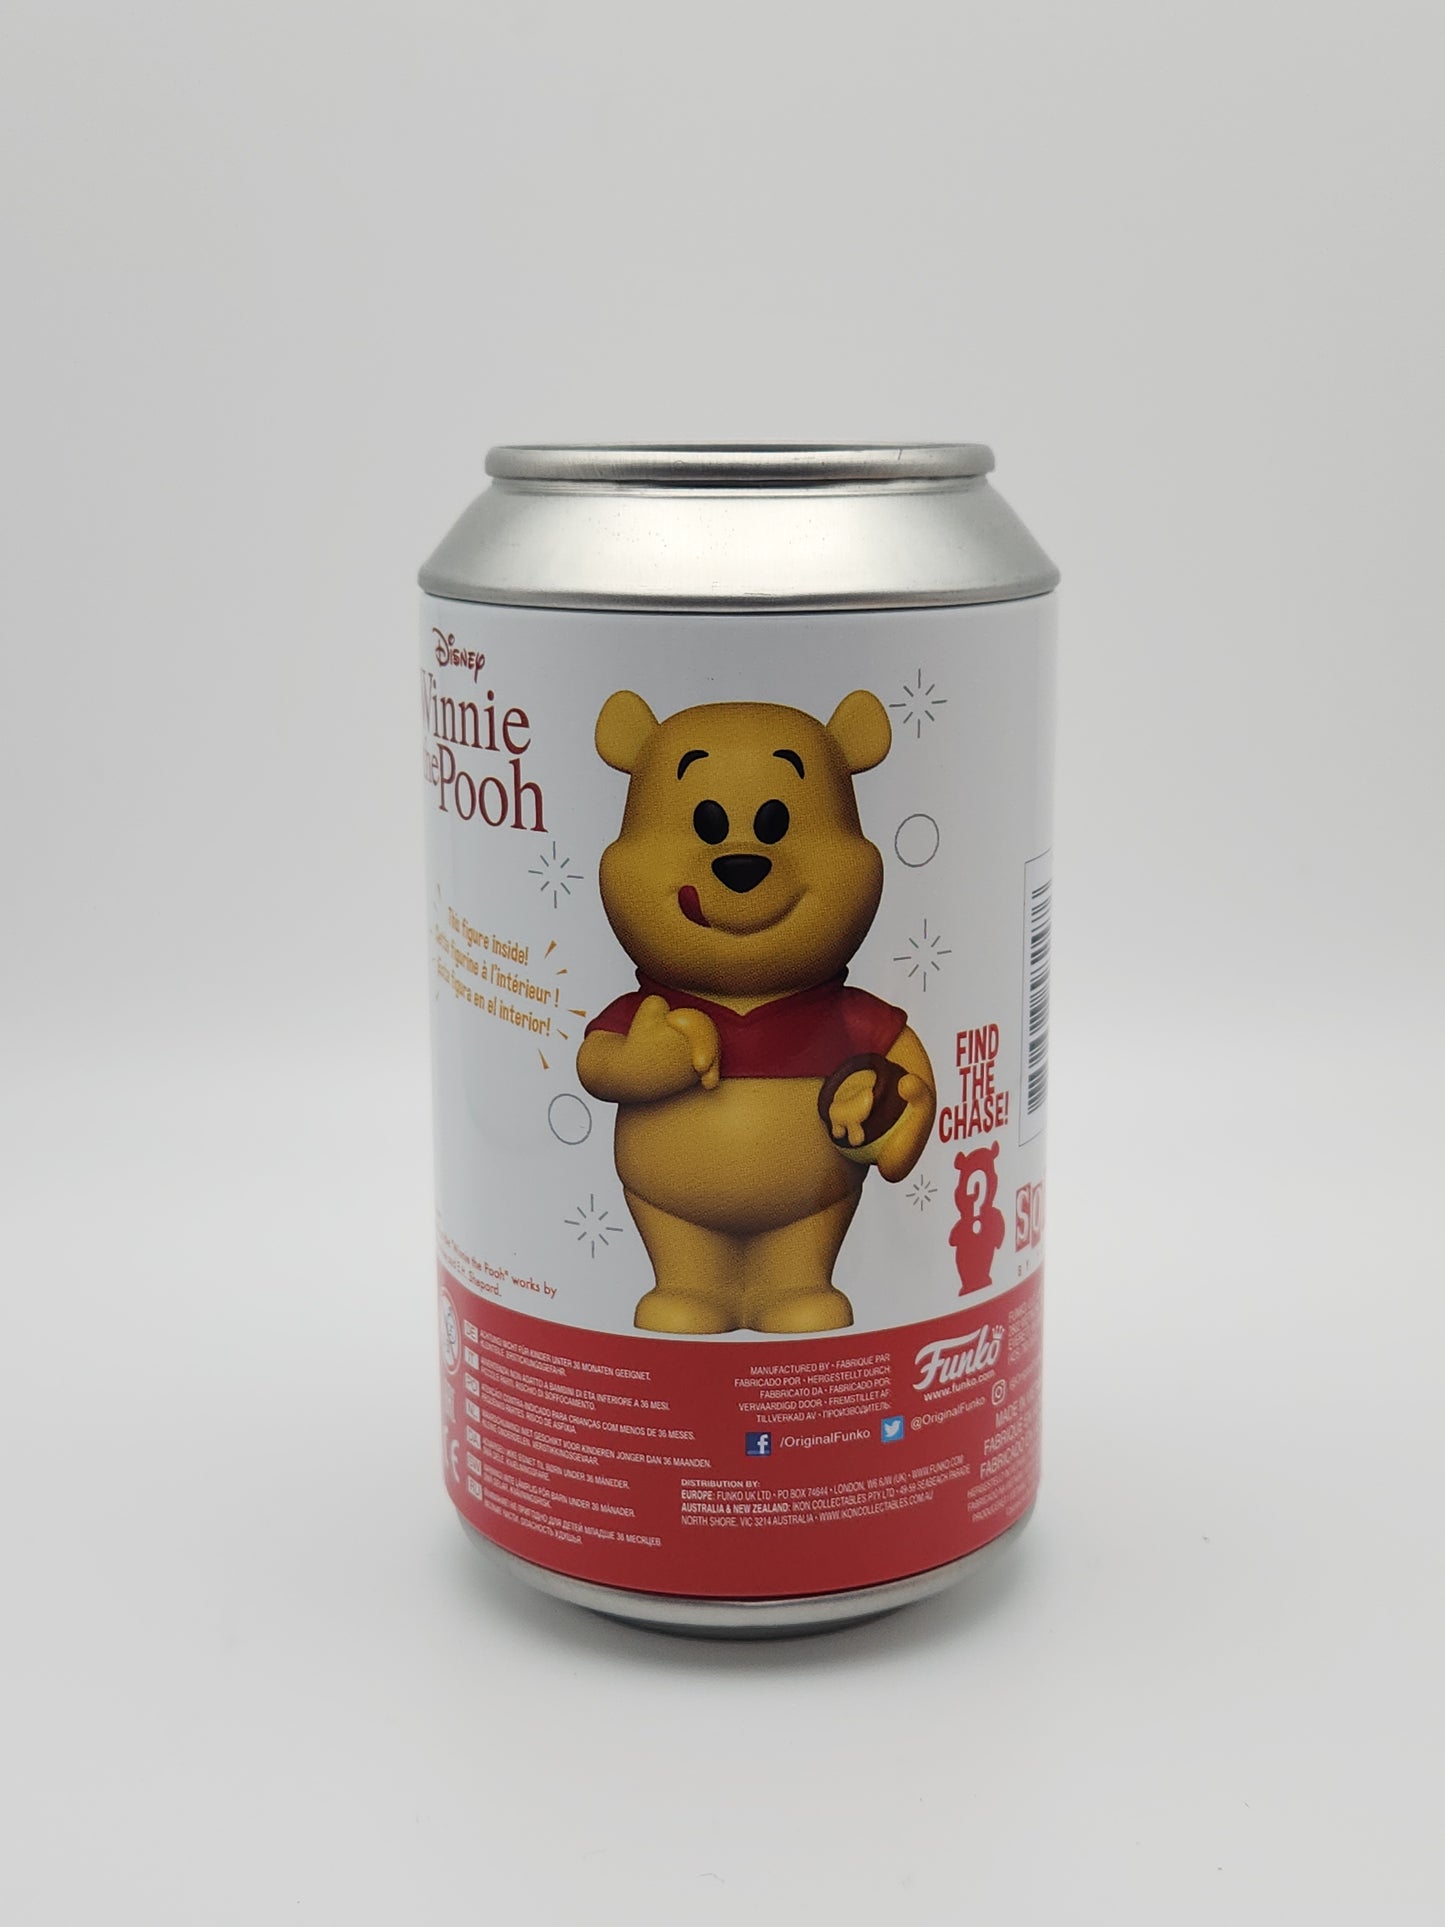 Funko Soda- Winnie The Pooh